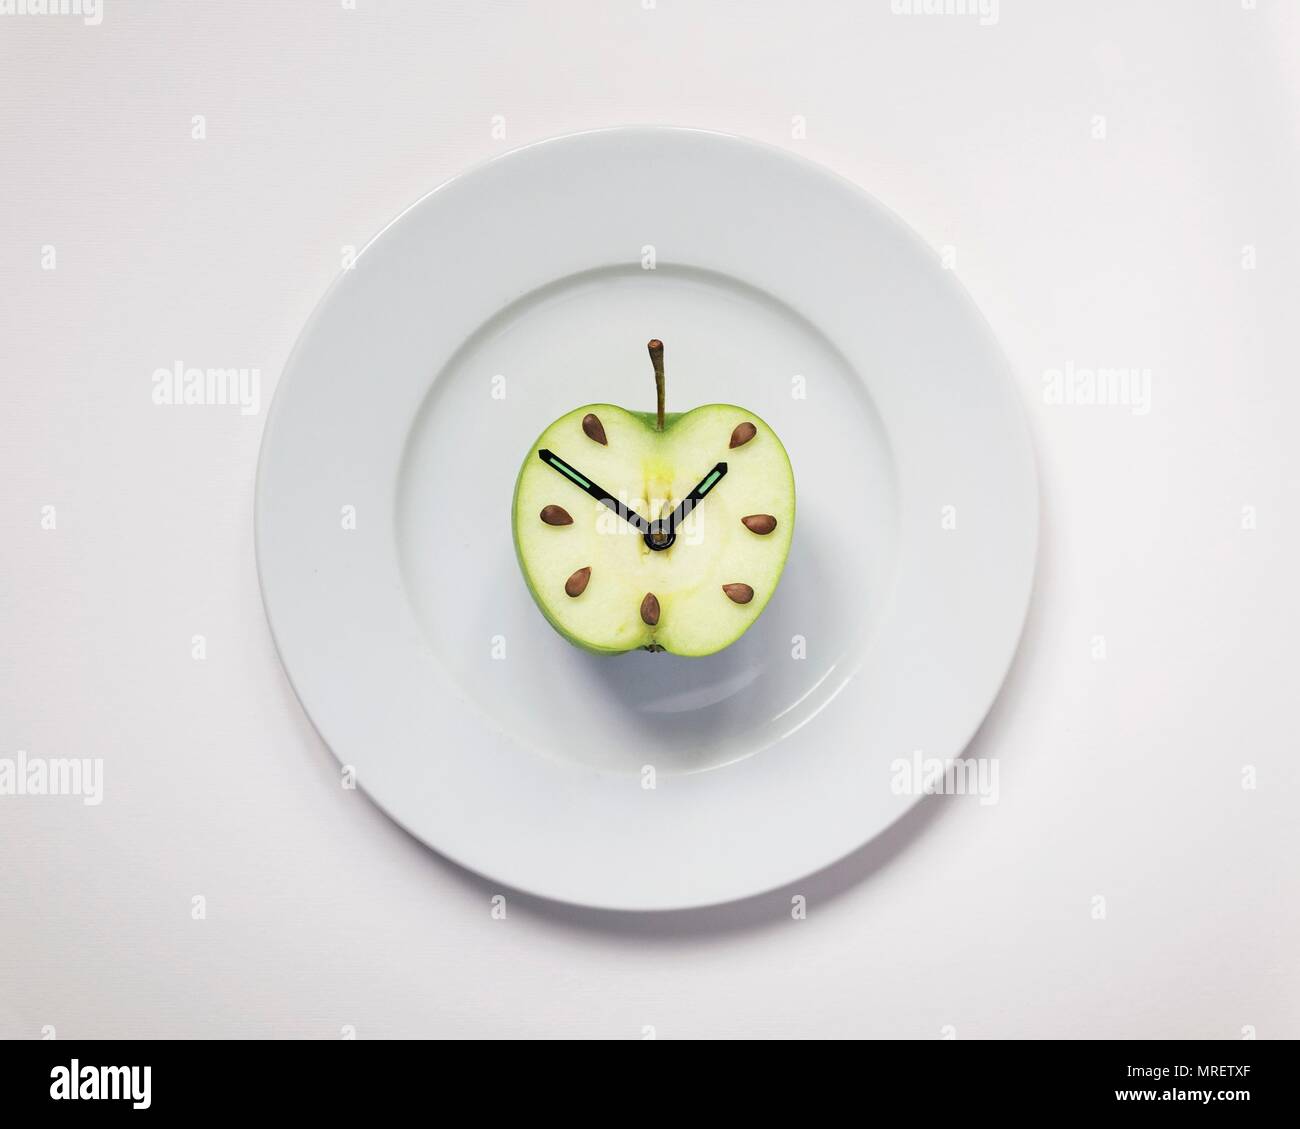 Half an apple on plate with clock hands, studio shot. Stock Photo